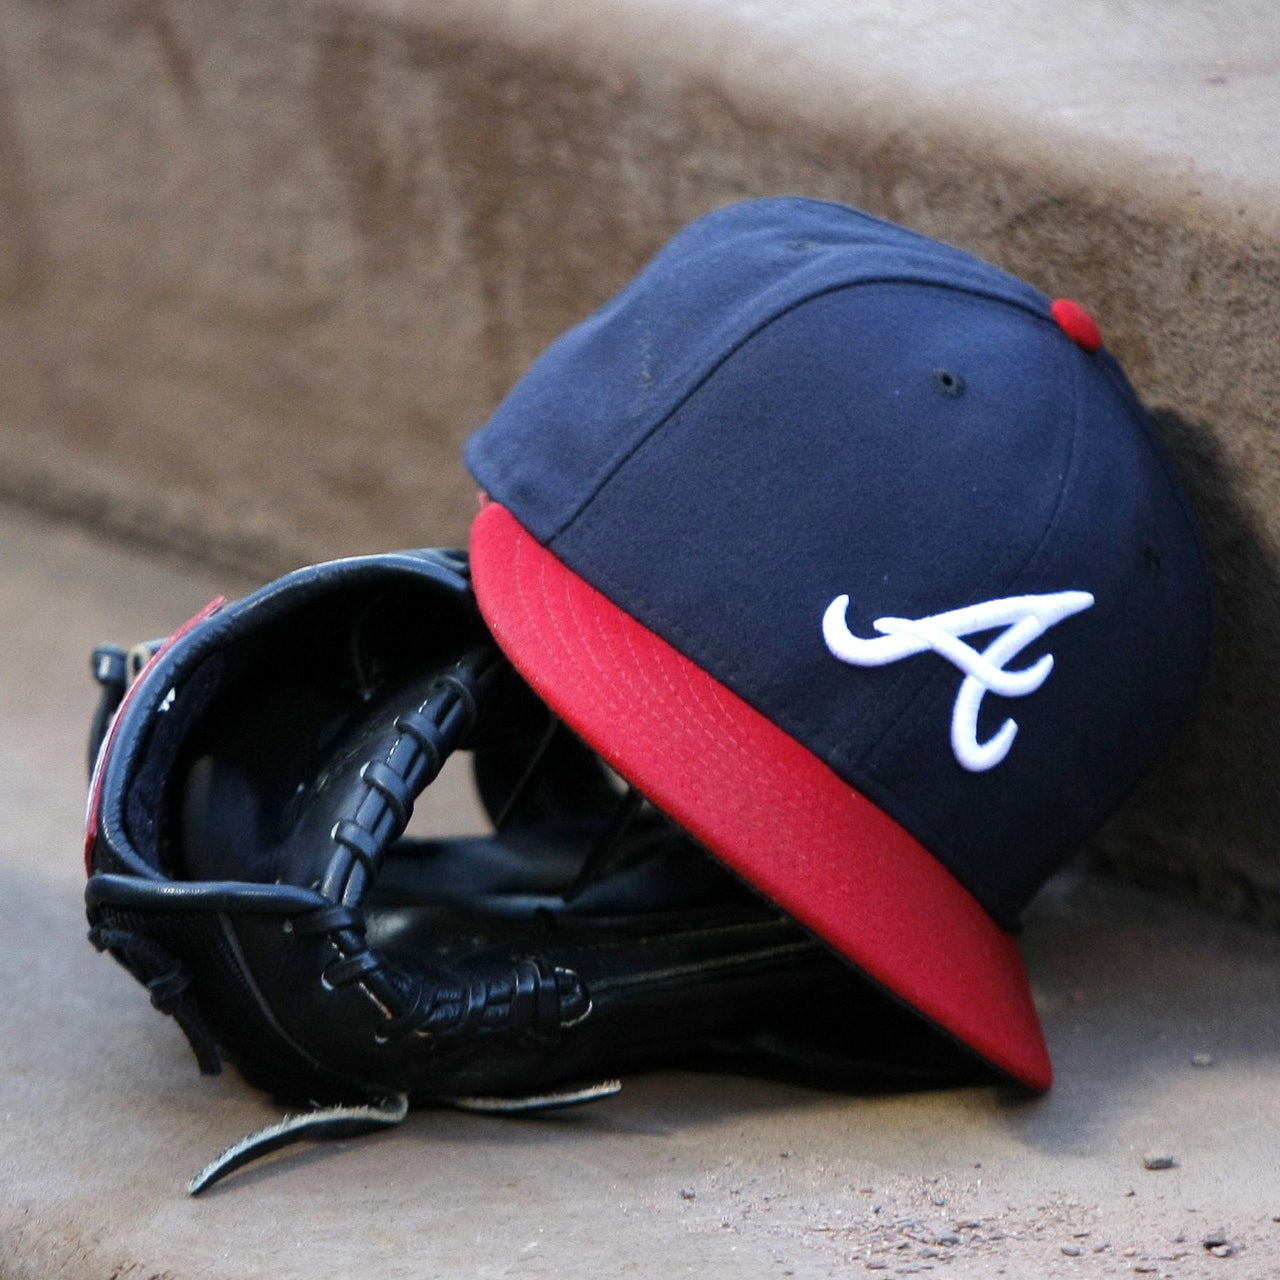 MLB Houston Astros Women's Christie Hat